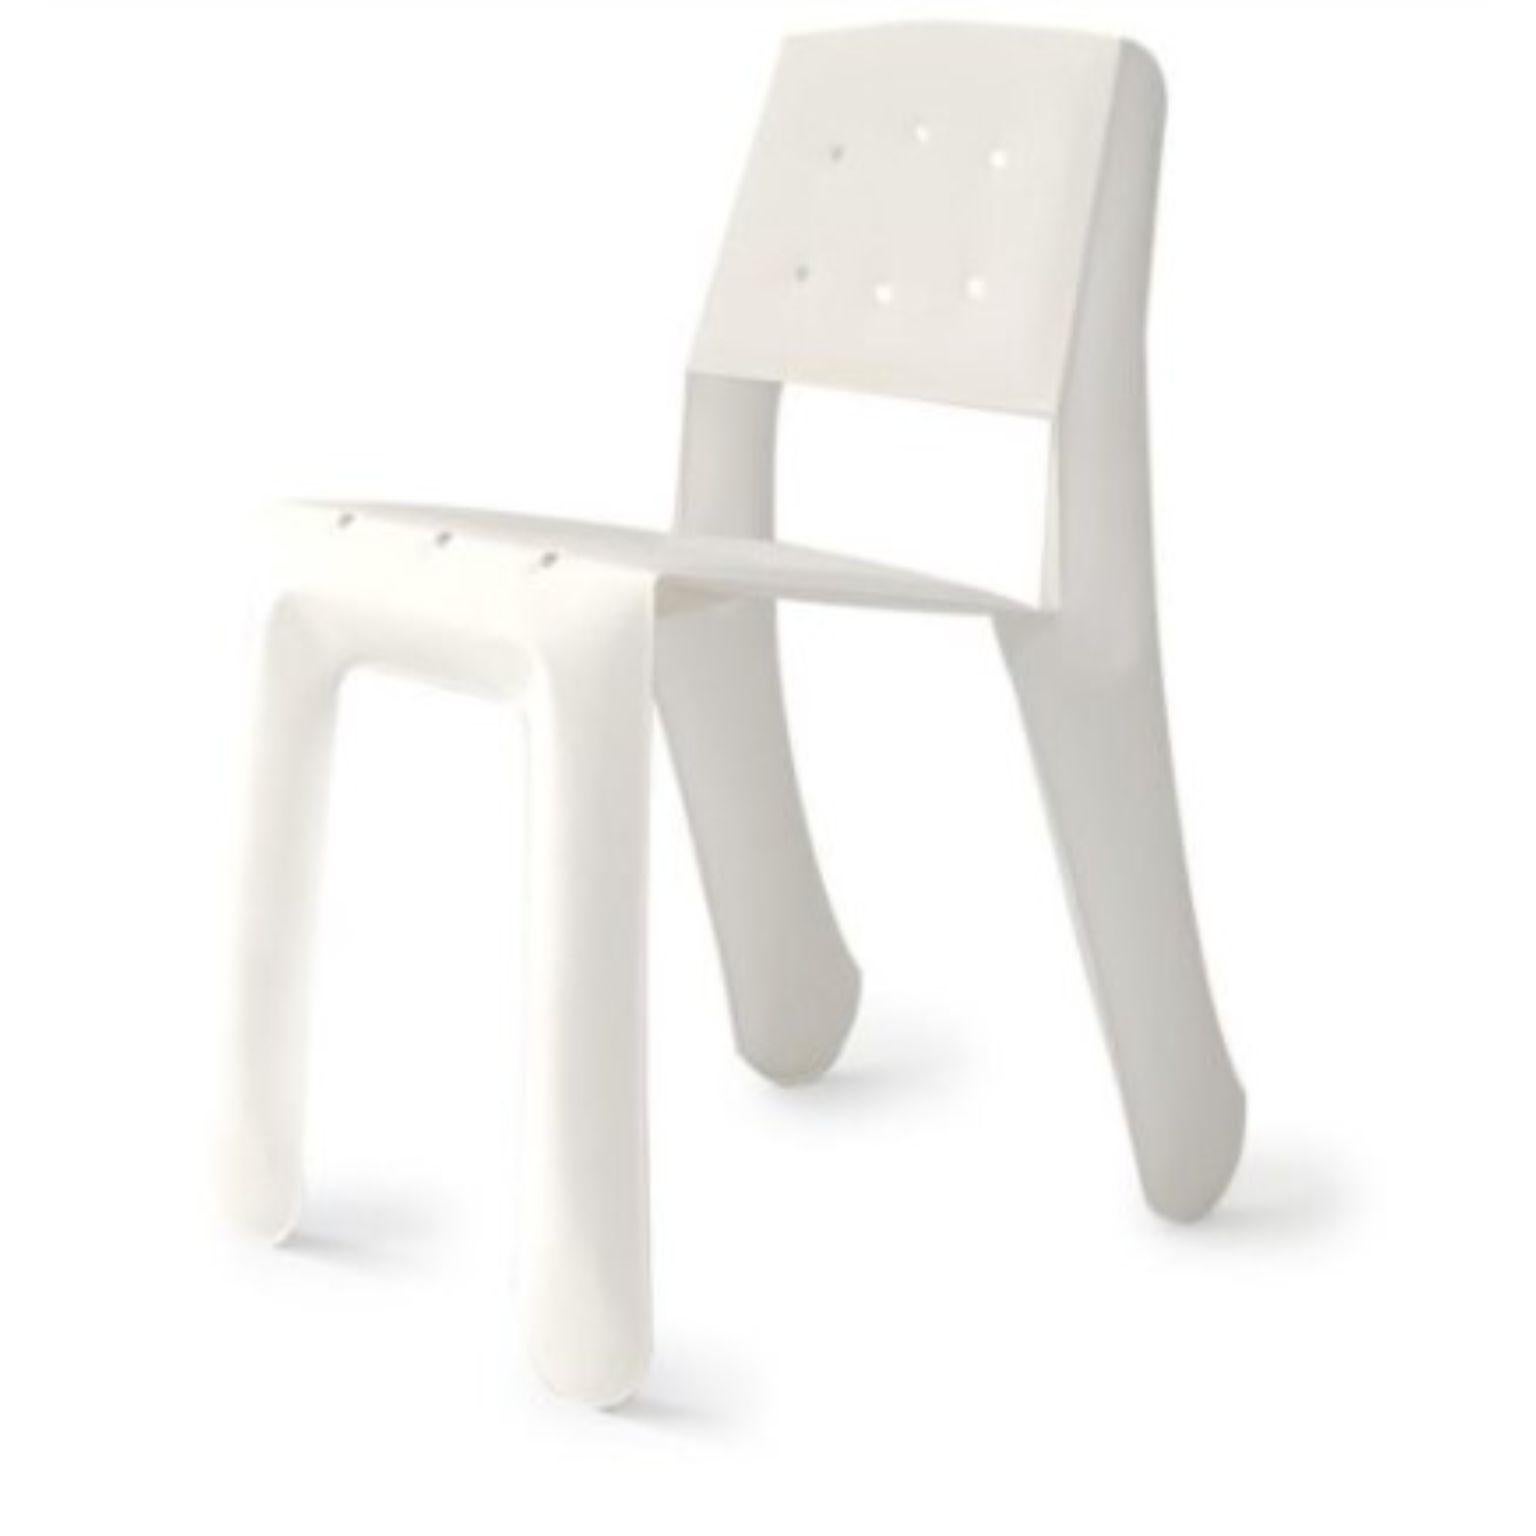 White matt aluminum Chippensteel 0.5 sculptural chair by Zieta
Dimensions: D 58 x W 46 x H 80 cm 
Material: Aluminum. 
Finish: Powder-coated. Matt finish. 
Available in colors: White Matt, Beige, Black, Blue-Gray, Graphite, Moss-Gray, and,